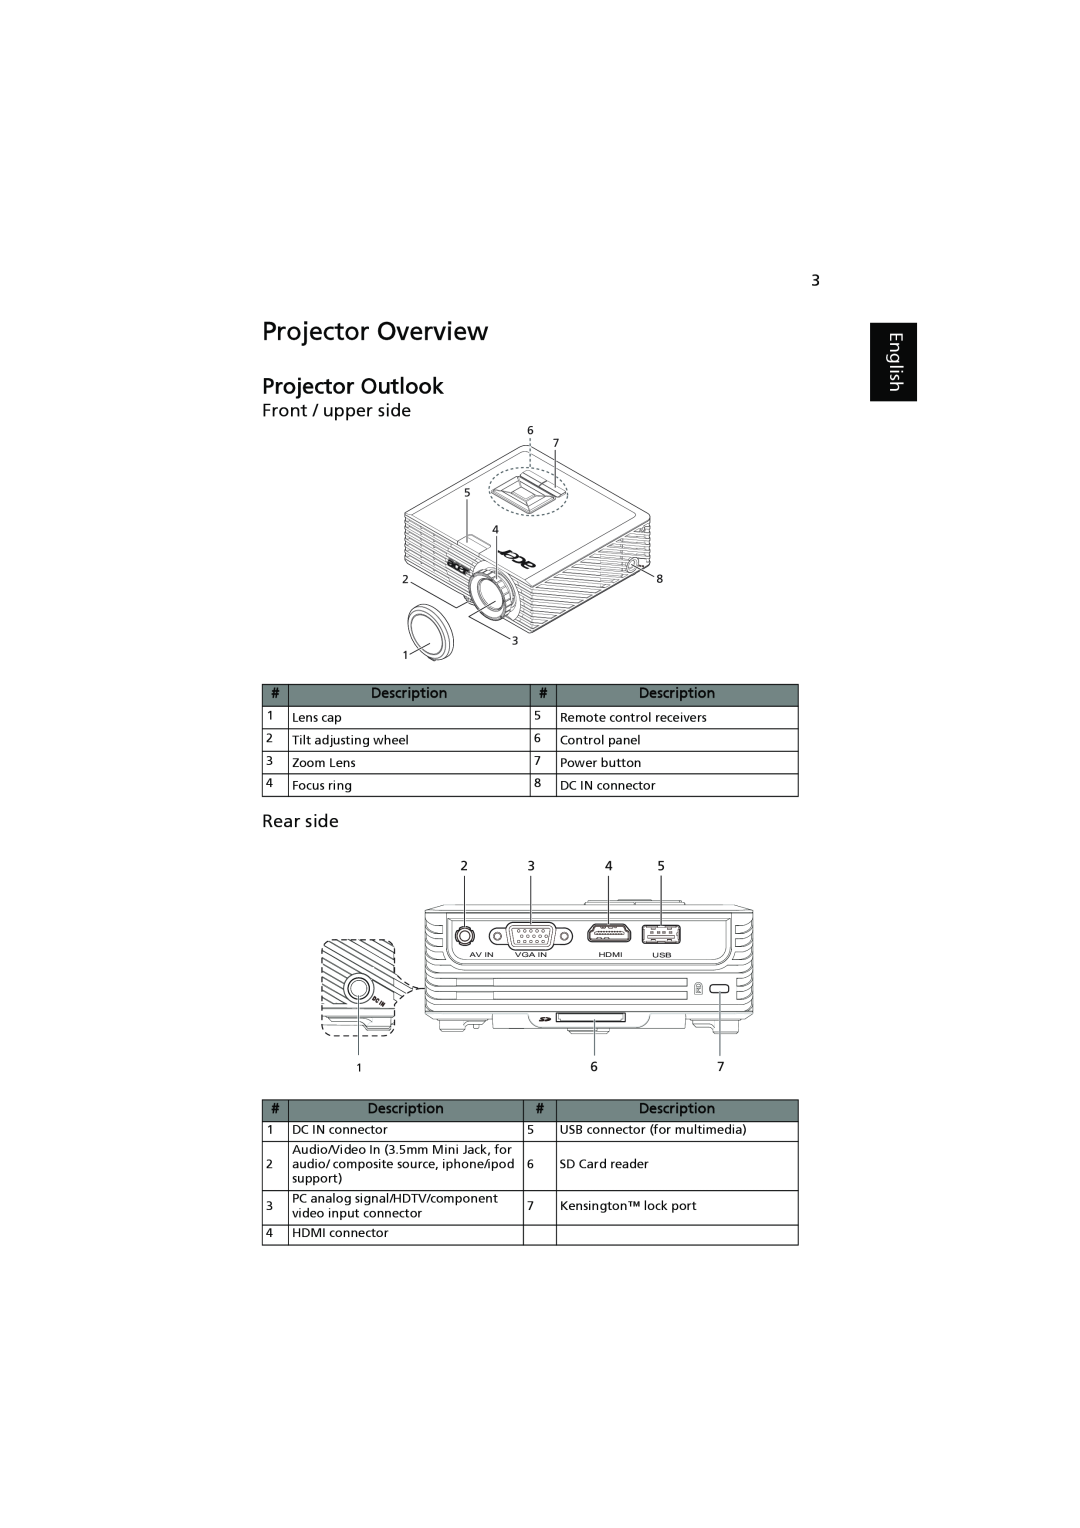 Acer K11 manual Projector Overview, Projector Outlook, Front / upper side, Rear side, English, Description 